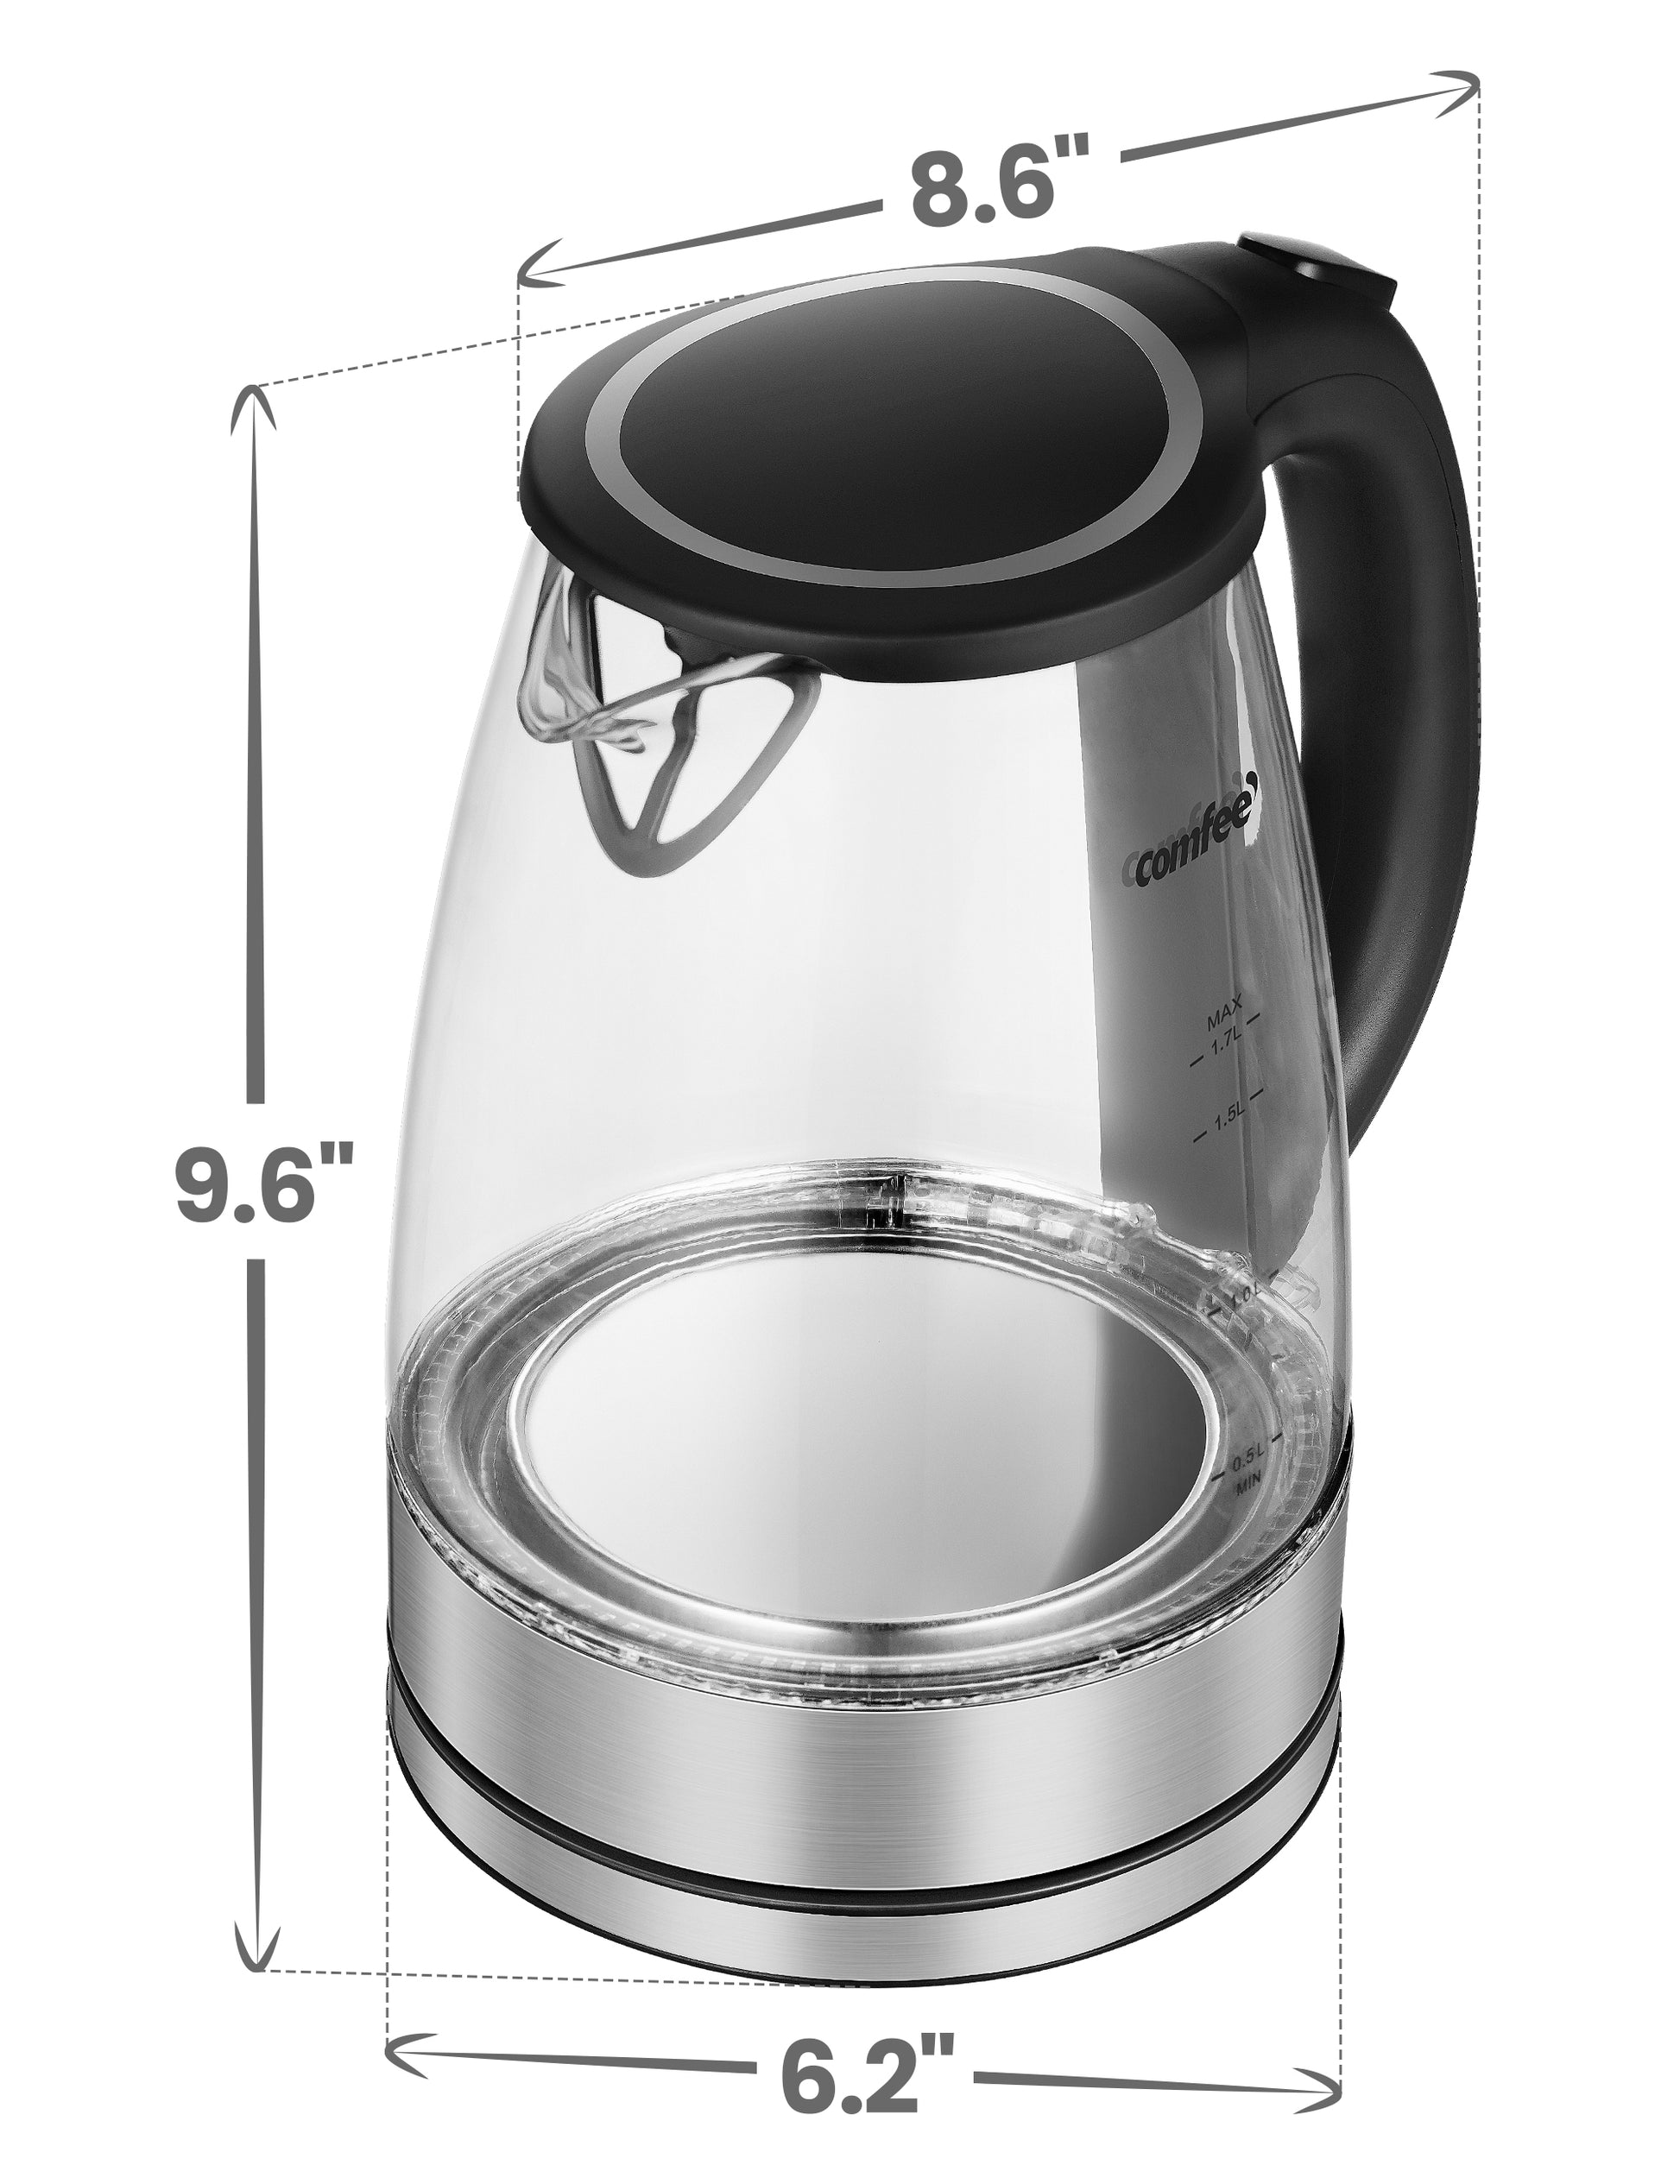 Ending Soon:COMFEE' Electric Kettle Teapot 1.7 Liter $24.39